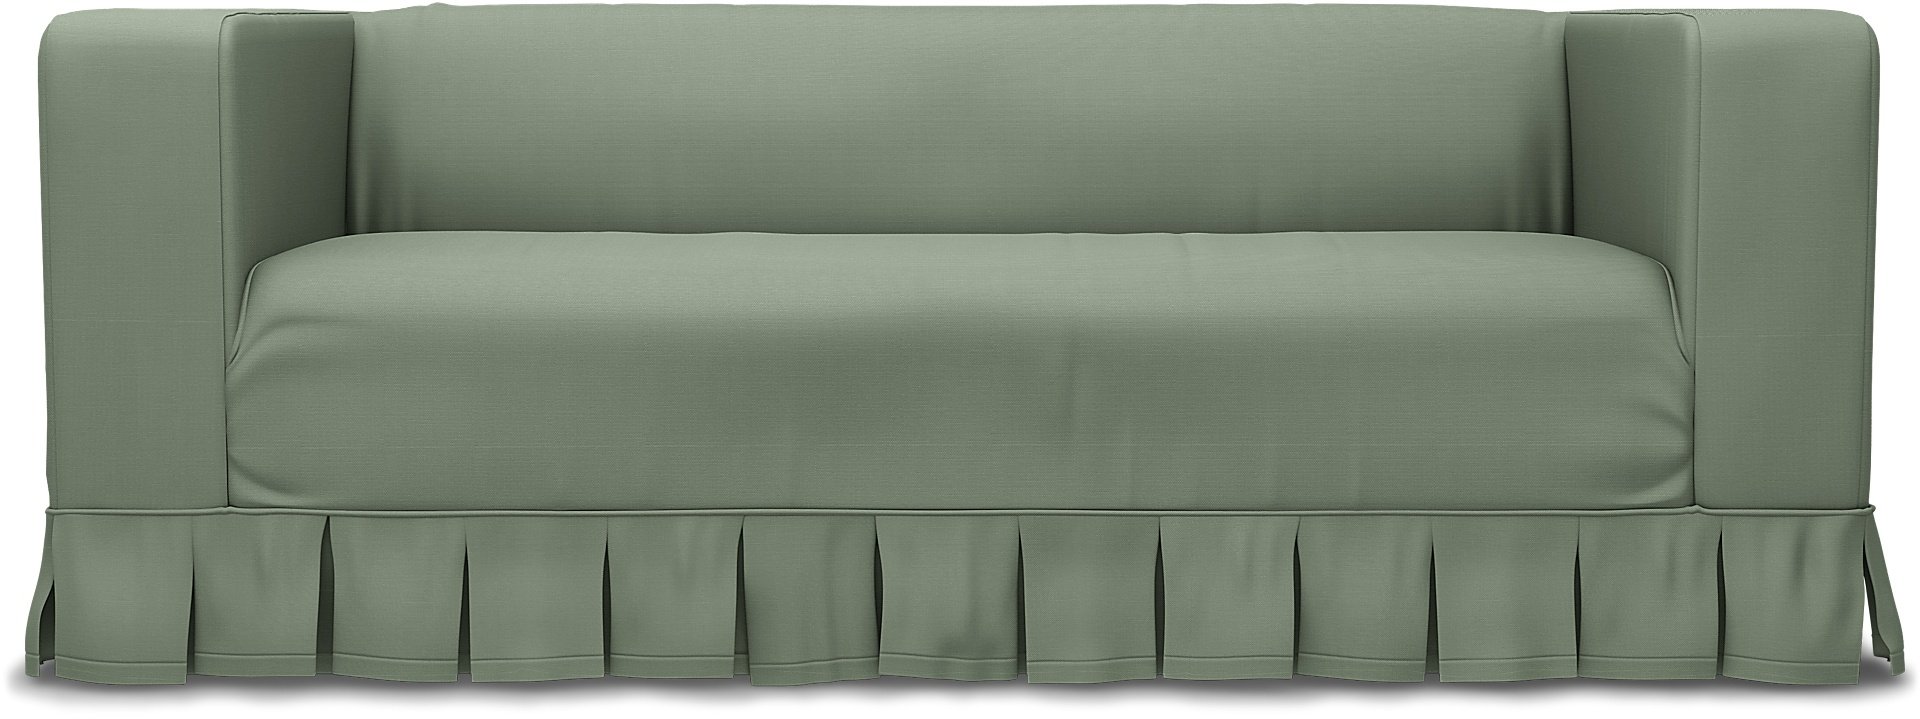 IKEA - Klippan 2 Seater Sofa Cover, Seagrass, Cotton - Bemz